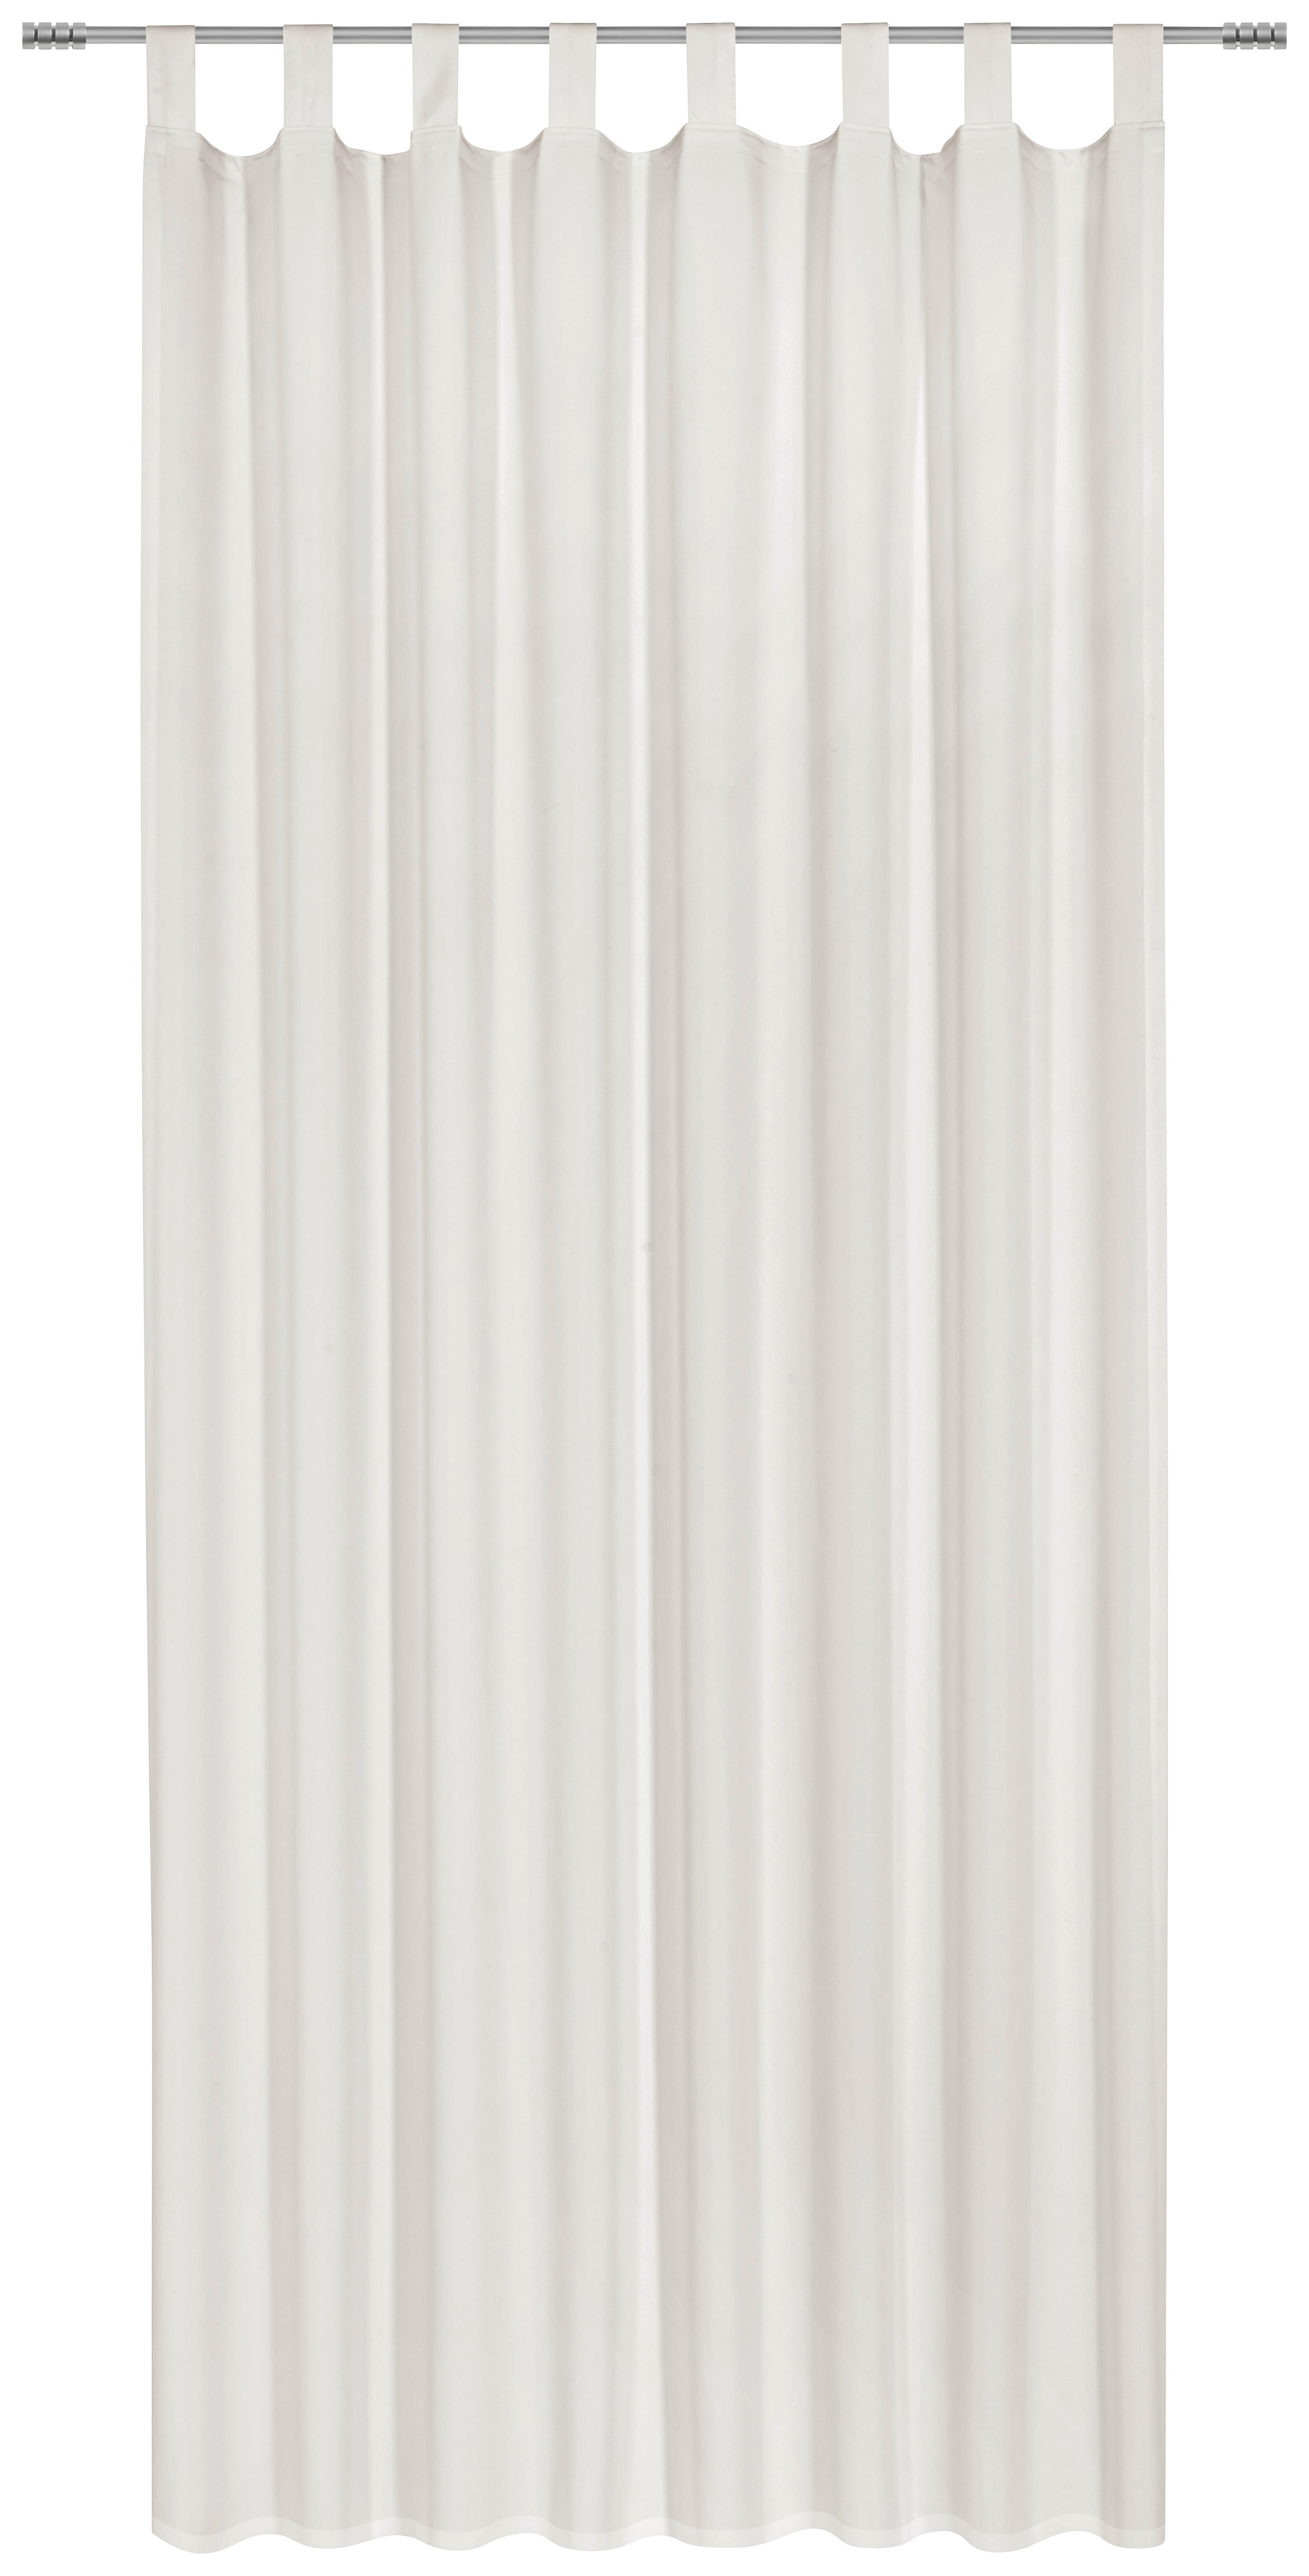 UTOMHUSGARDIN ej transparent  - naturfärgad, Basics, textil (140/300cm) - Esposa